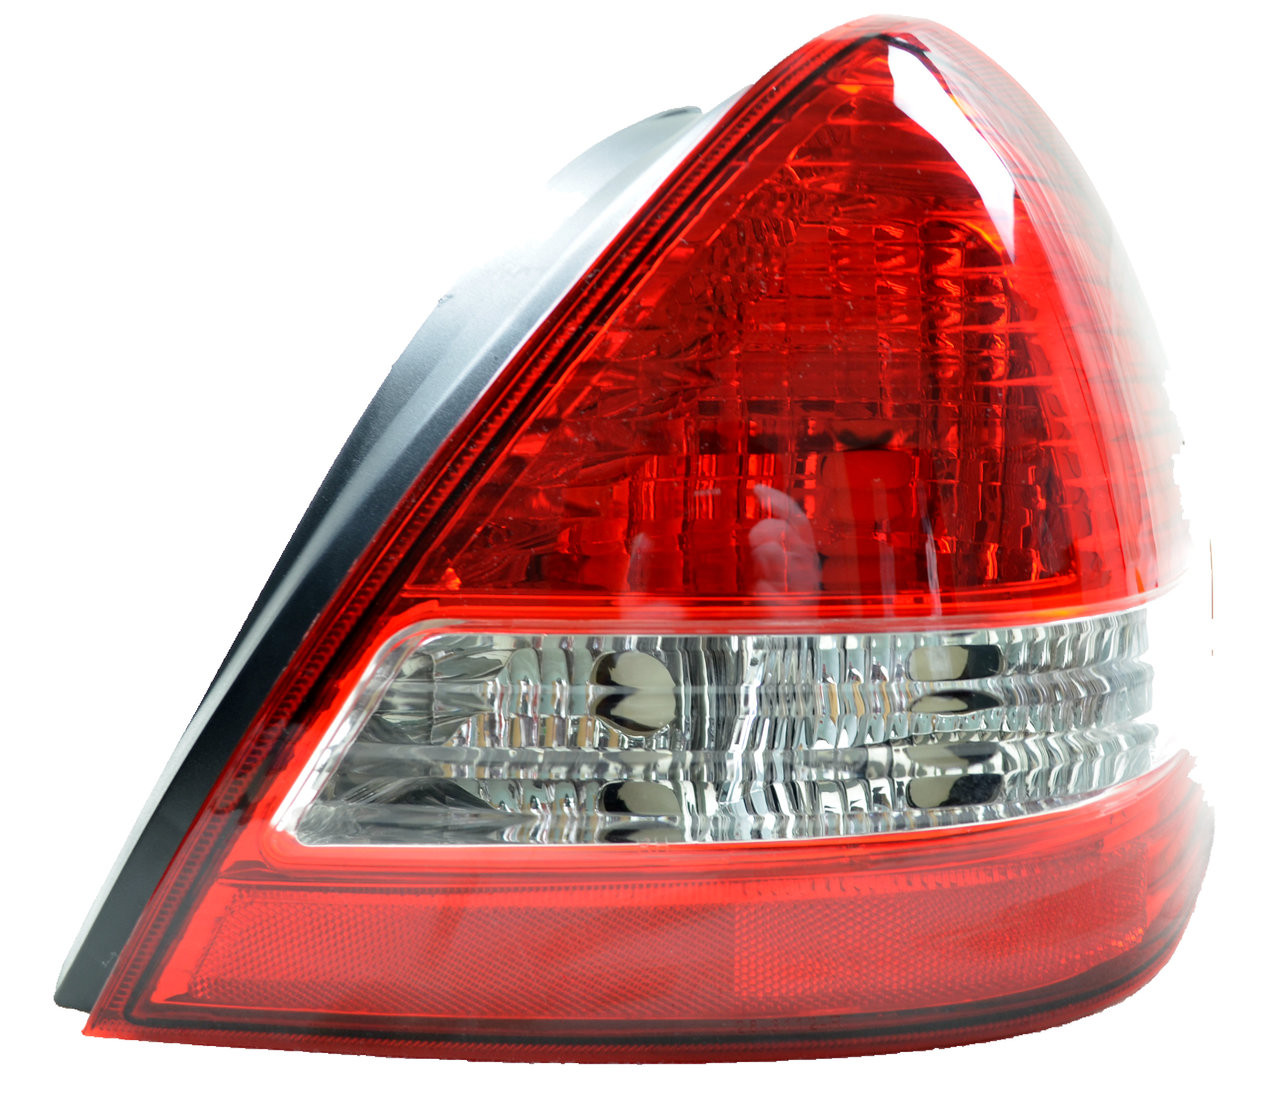 Tail Light for Nissan Tiida 02/06-11/09 New Right RHS C11 Sedan 06 07 08 09